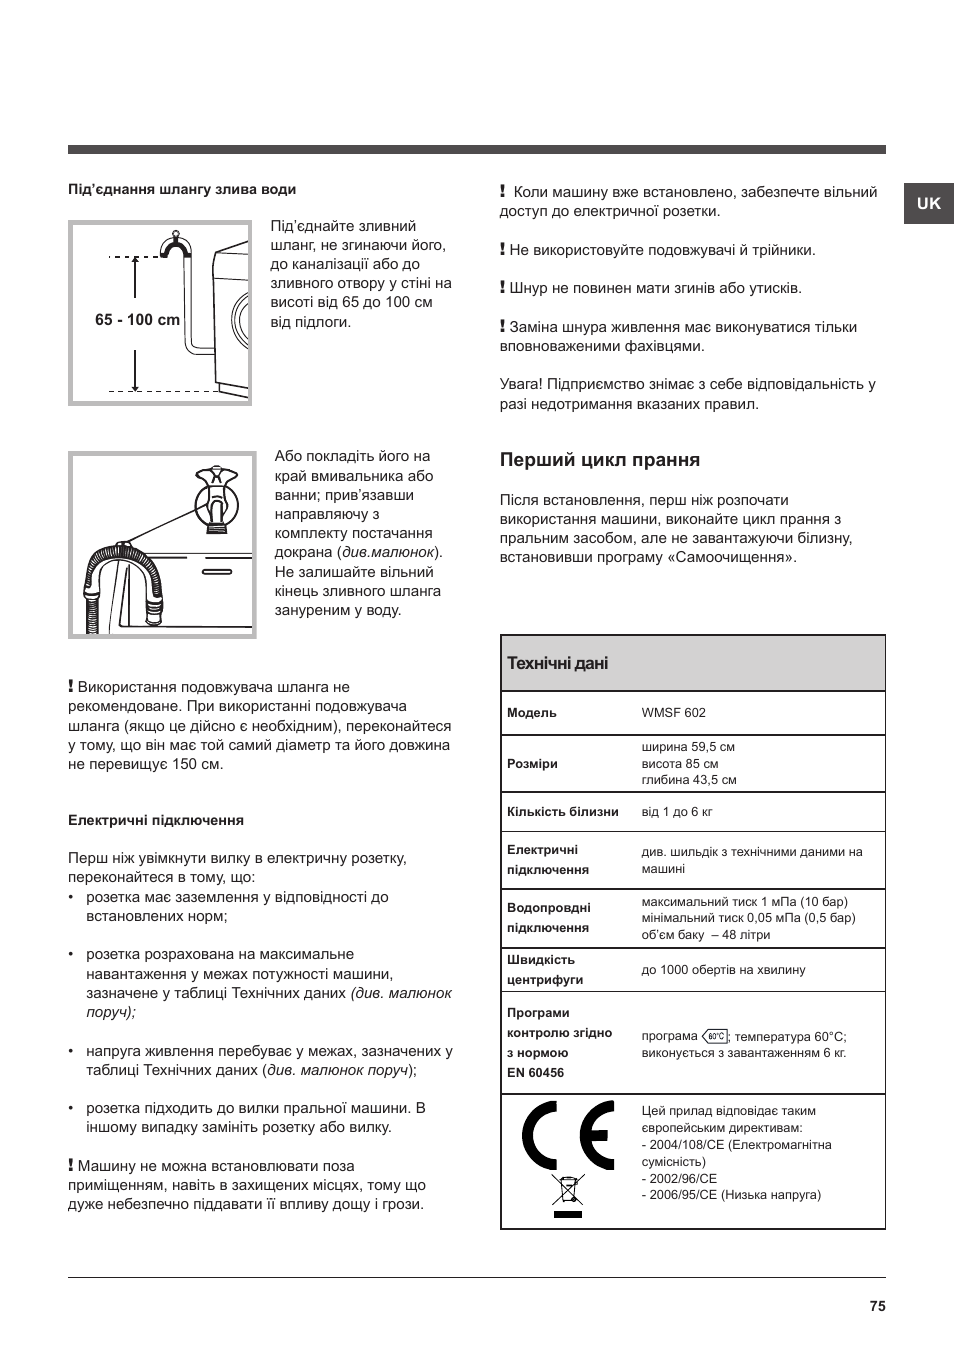 Перший цикл прання | Hotpoint Ariston WMSF 602 User Manual | Page 75 / 84 |  Original mode